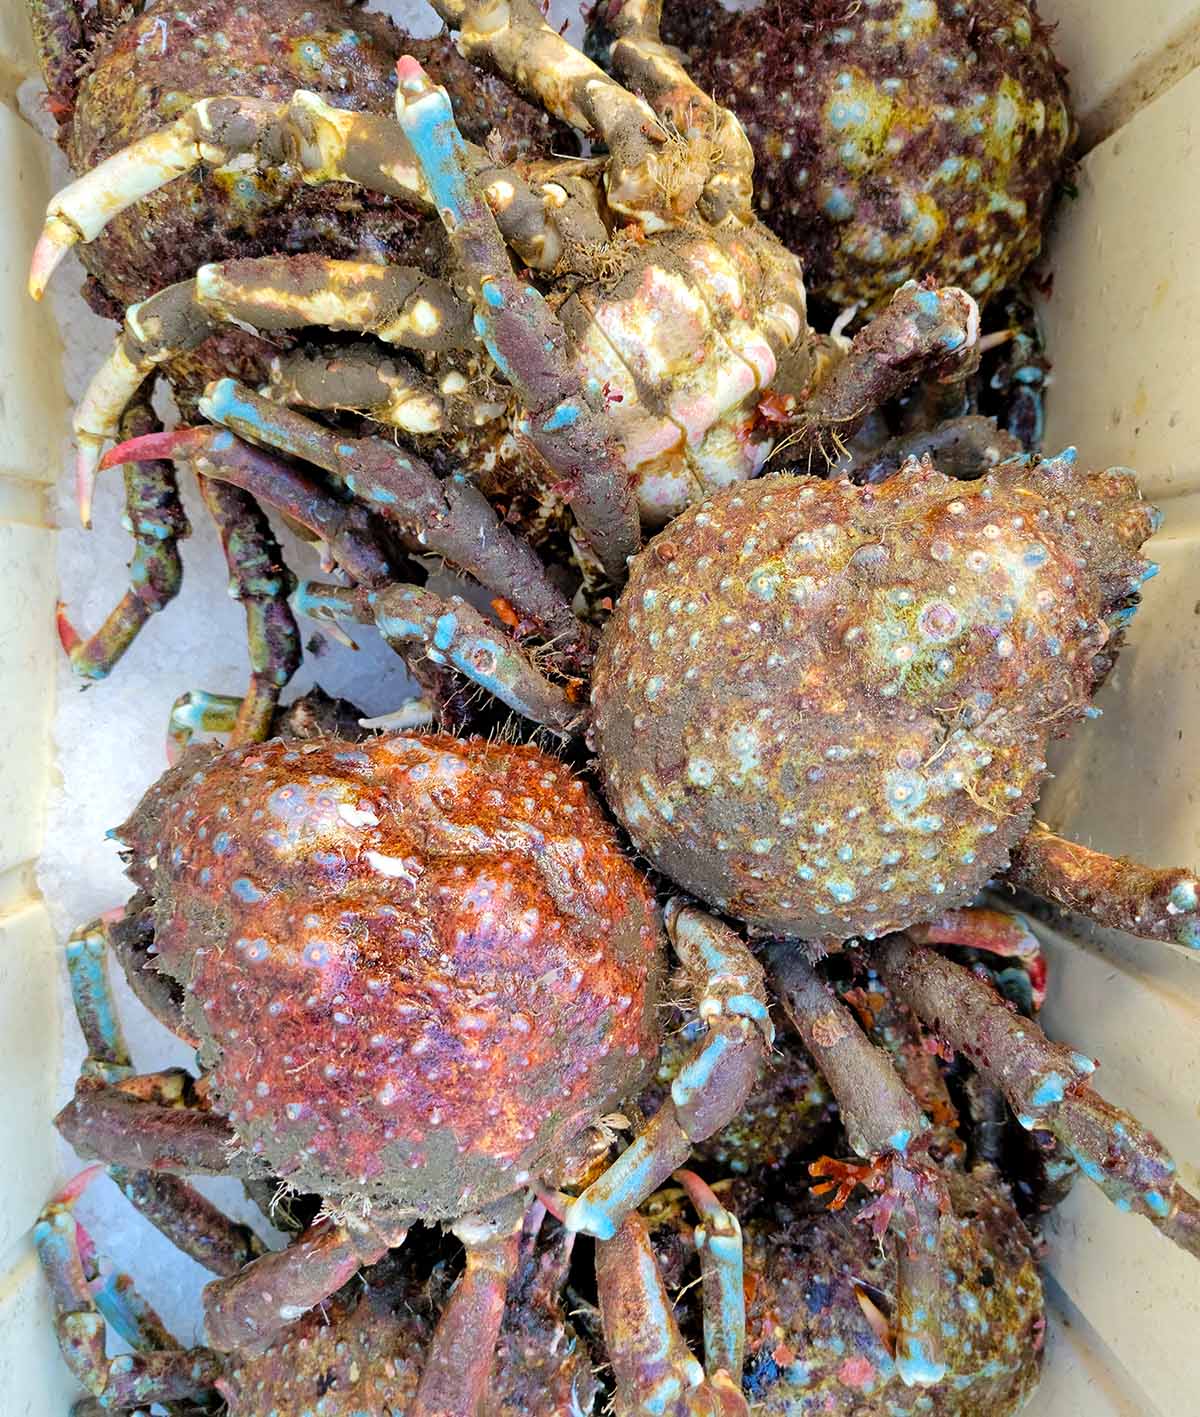 Live Pacific spider crabs, sheep crabs, in a market in Ensenada, Mexico. 